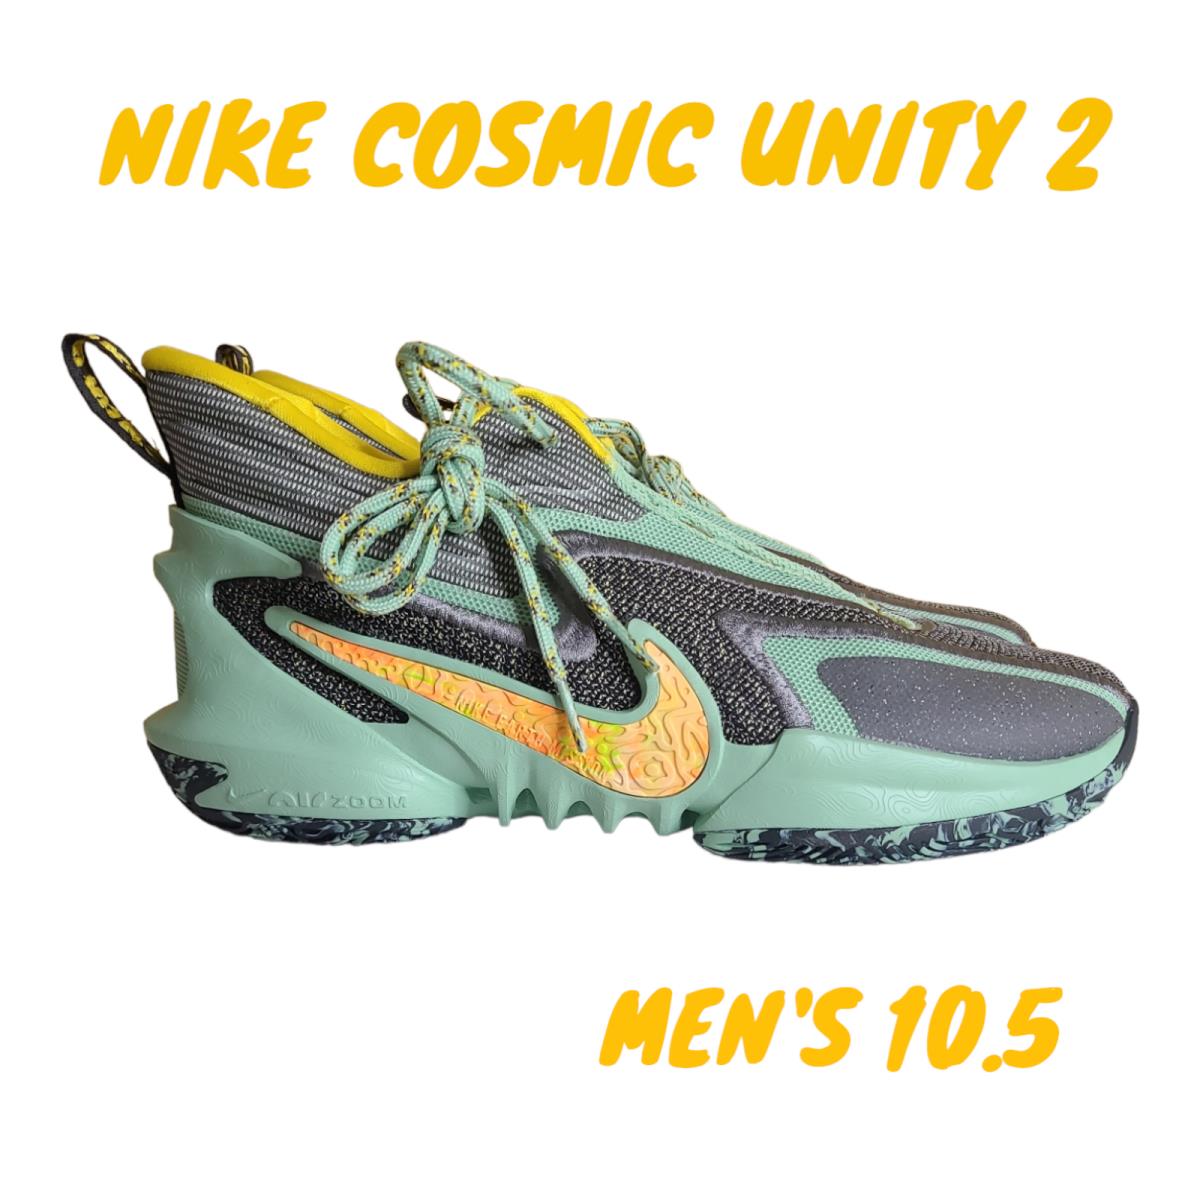 Mens Nike Cosmic Unity 2 Enamel Green Multi Basketball Shoe DH1537-300 10.5